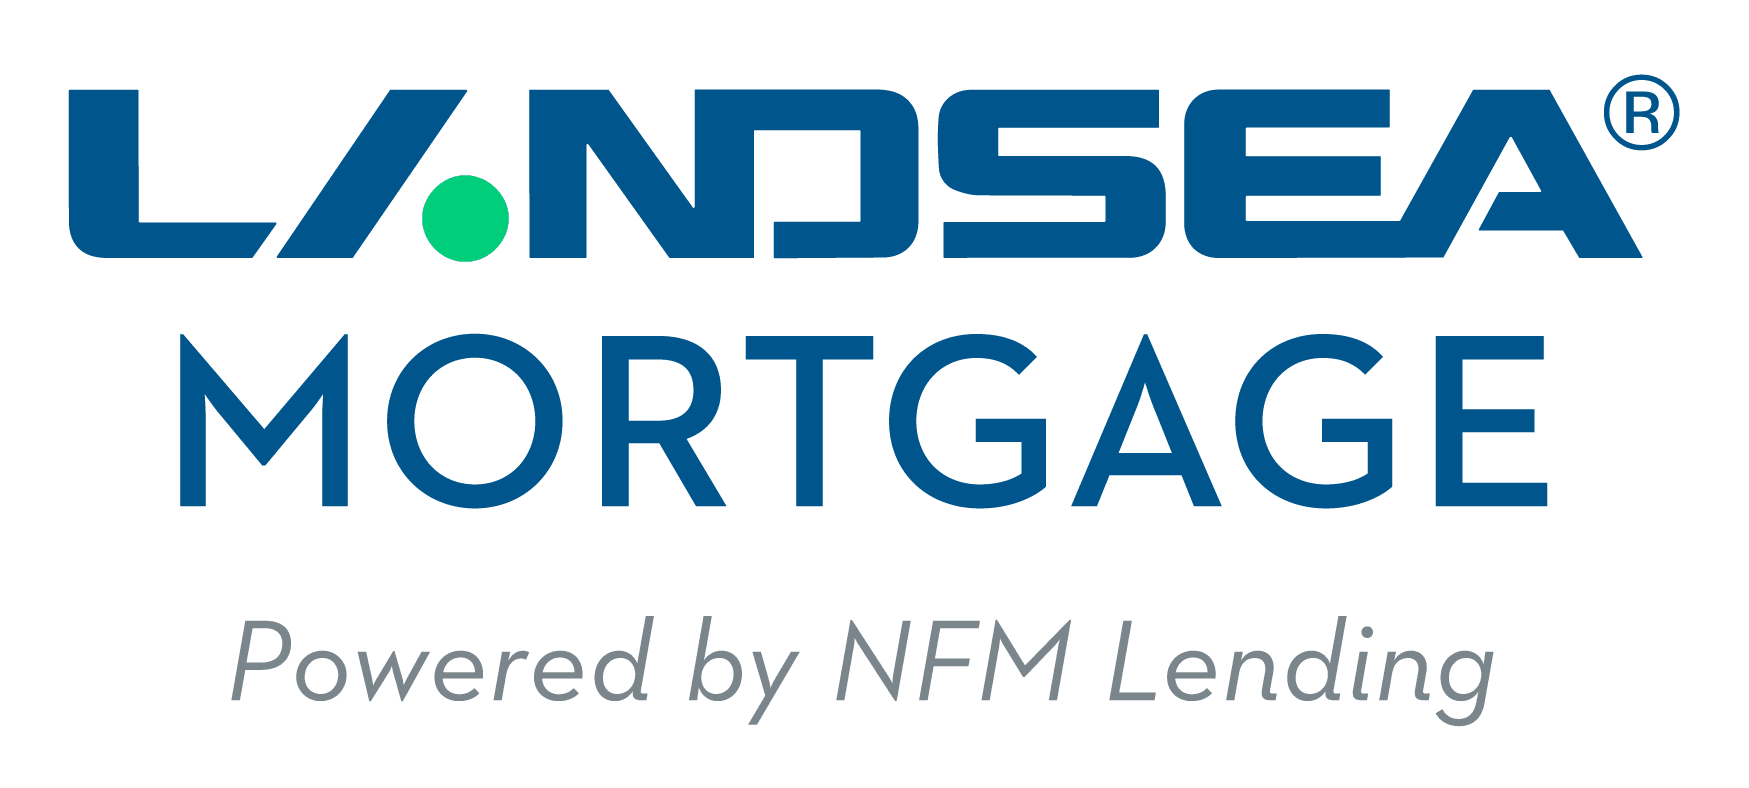 Landsea Mortgage – Powered by NFM Lending